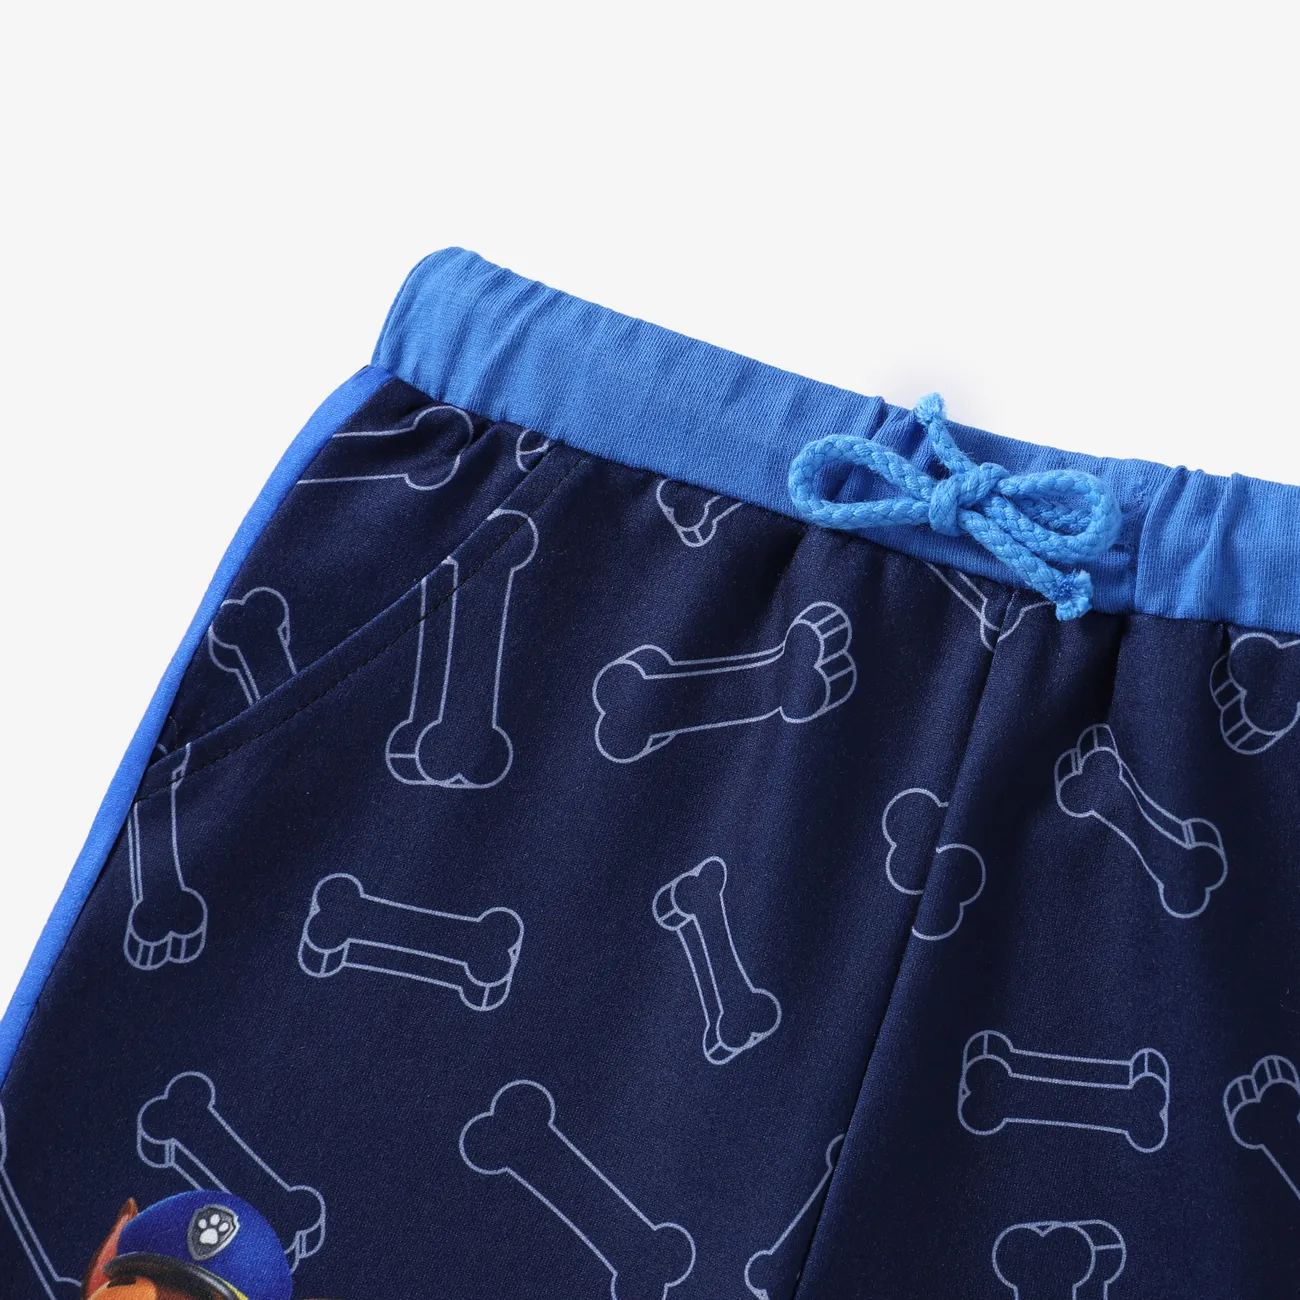 Paw Patrol Toddler Boys/Girls 2pcs Character Print Cotton T-shirt with Shorts Sporty Set Blue big image 1